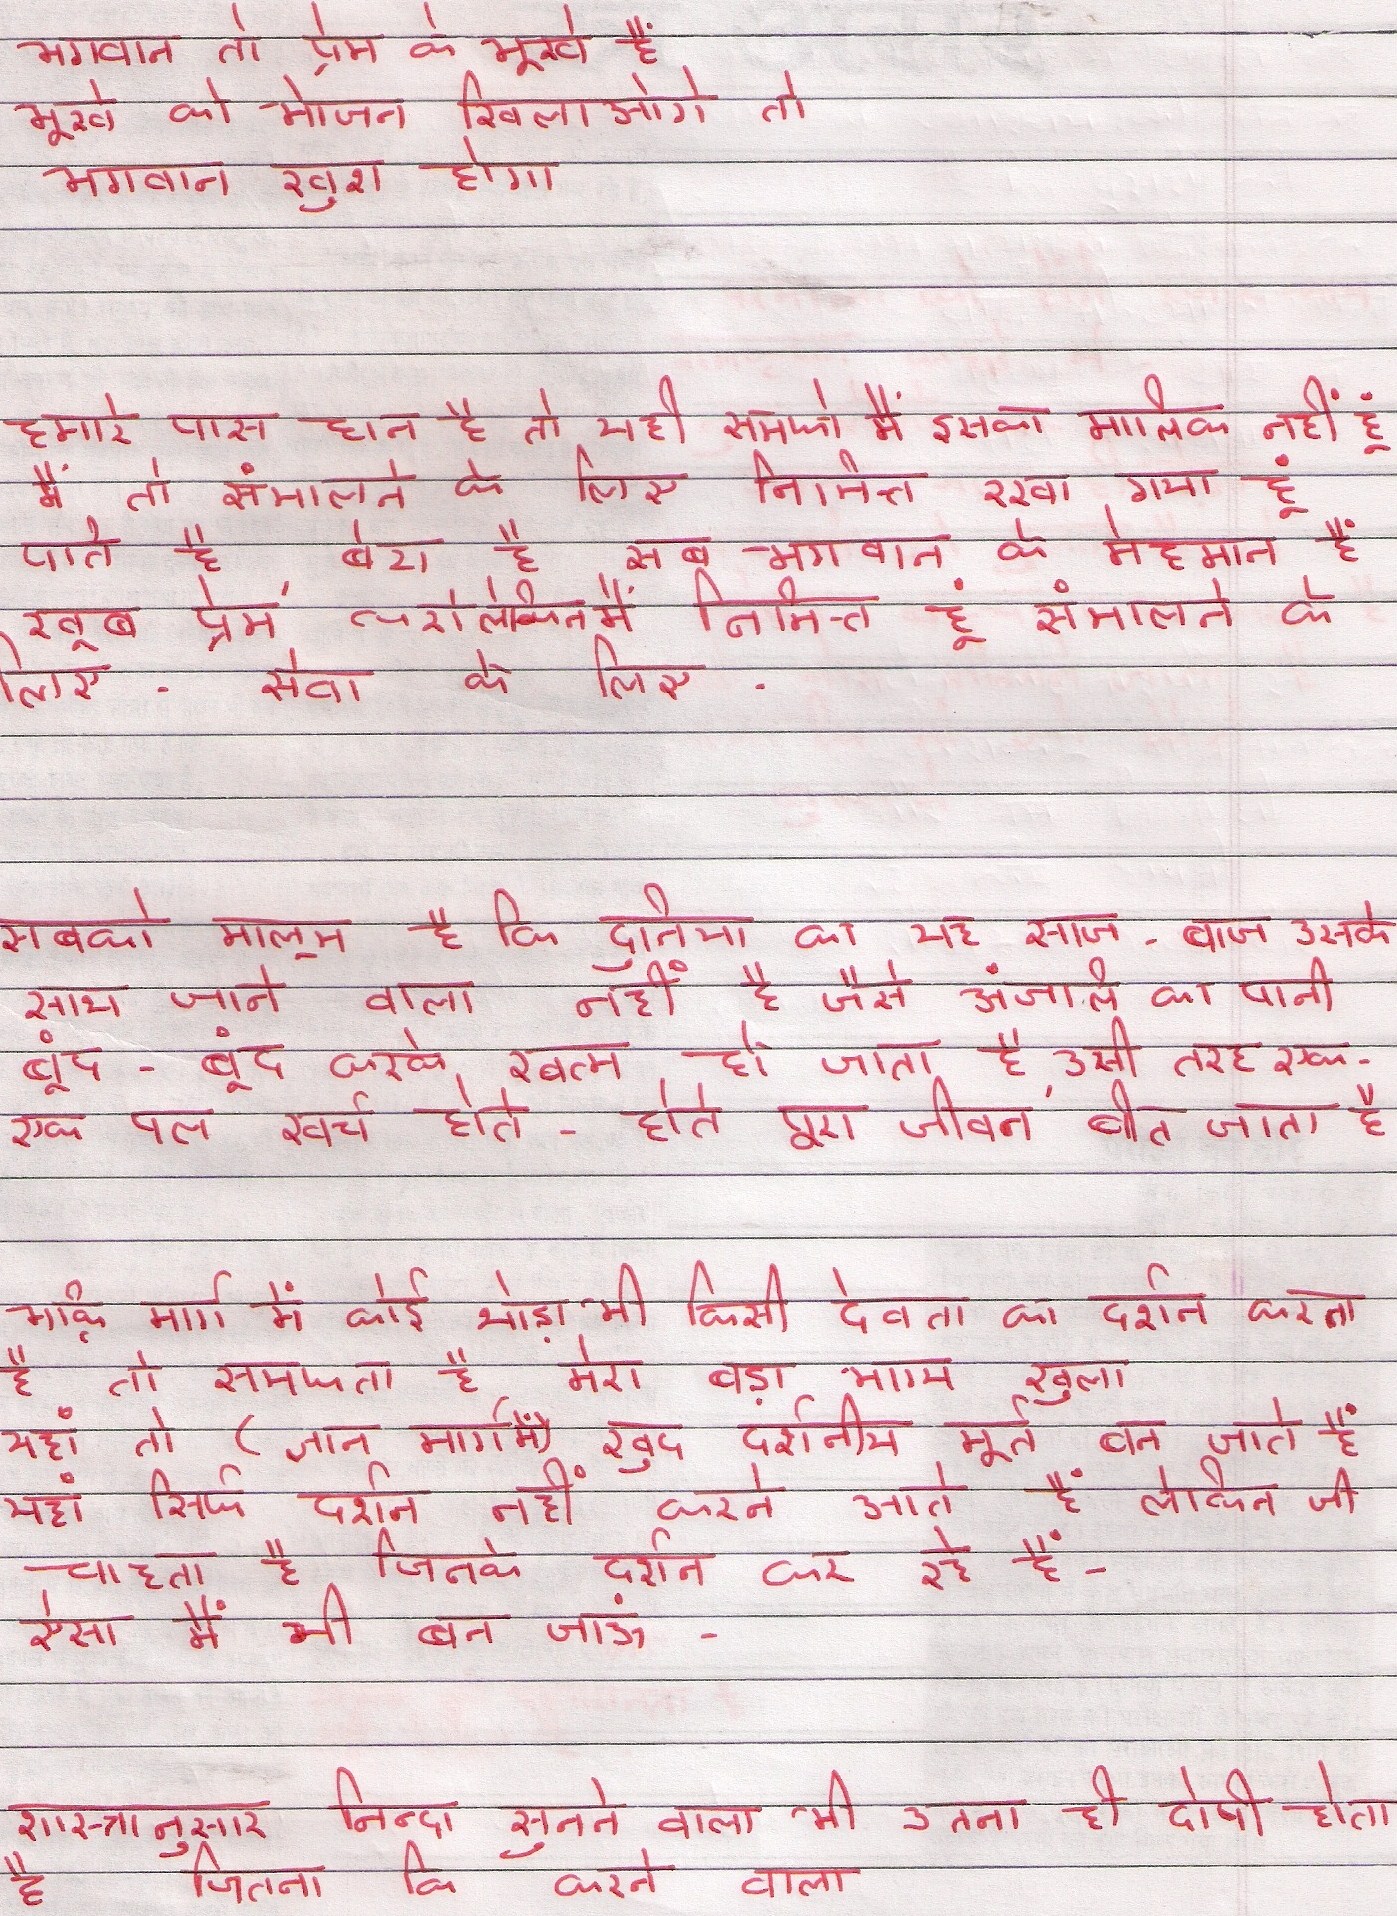 short sad love story in hindi